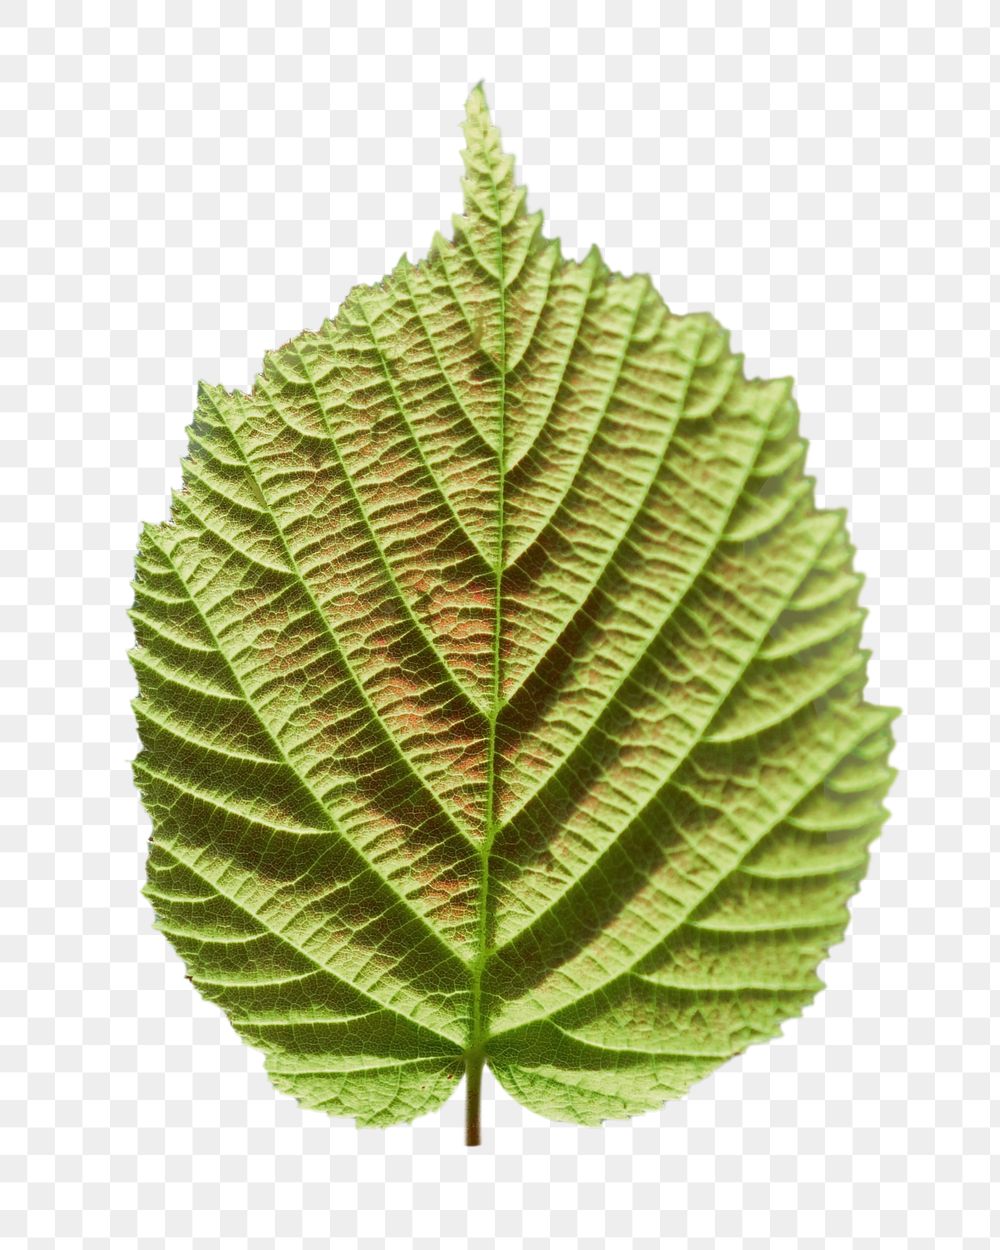 Perilla leaf png sticker, transparent background